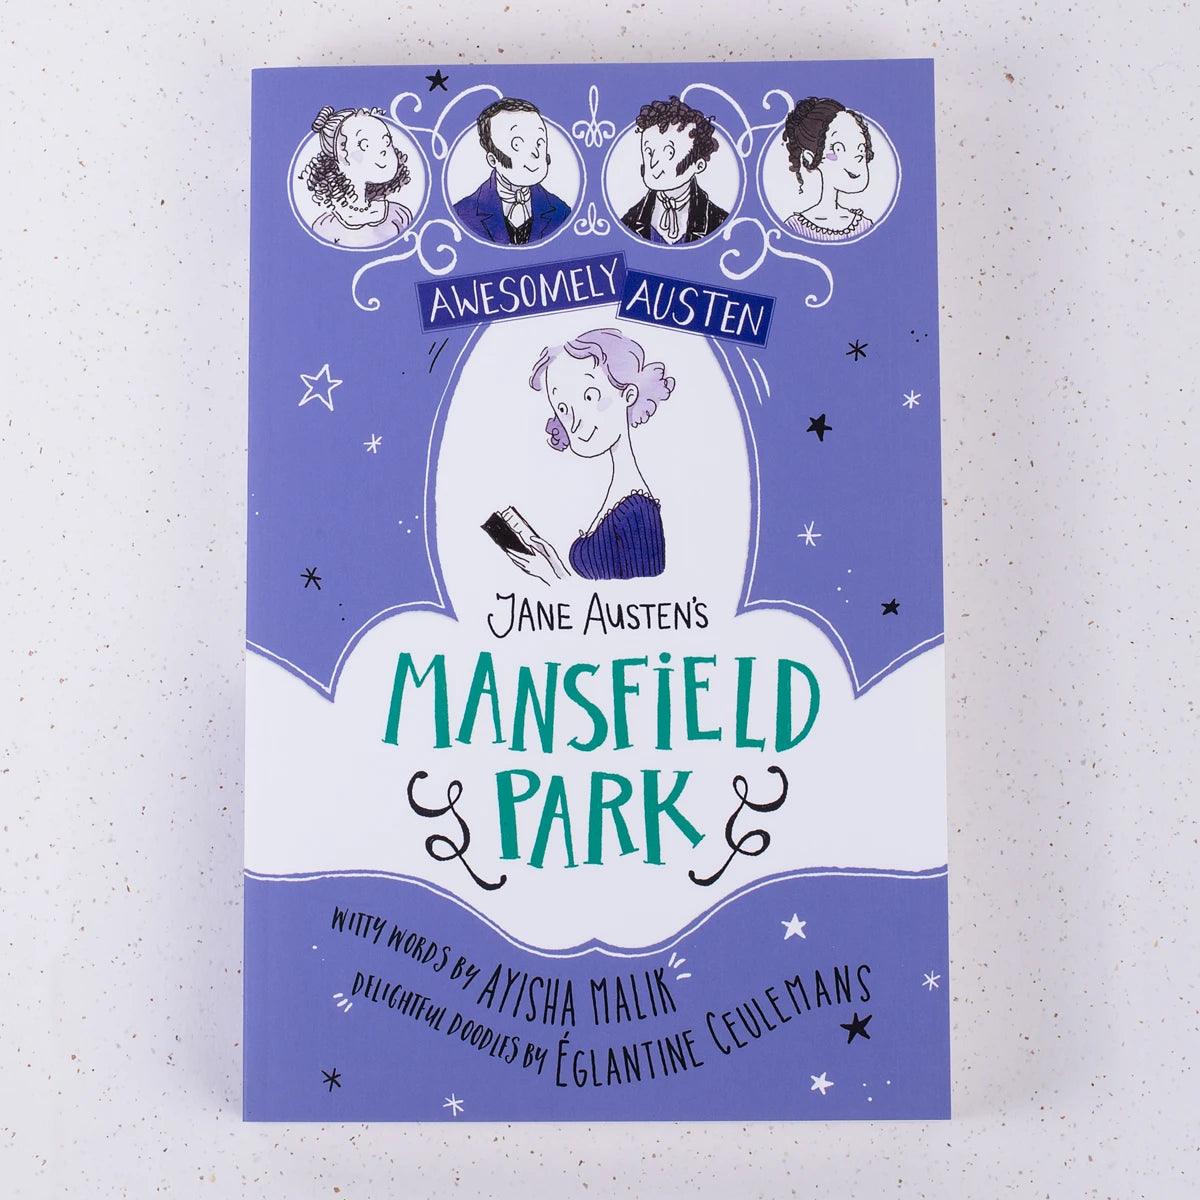 Jane Austen's Mansfield Park - Awesomely Austen Retold & Illustrated - JaneAusten.co.uk